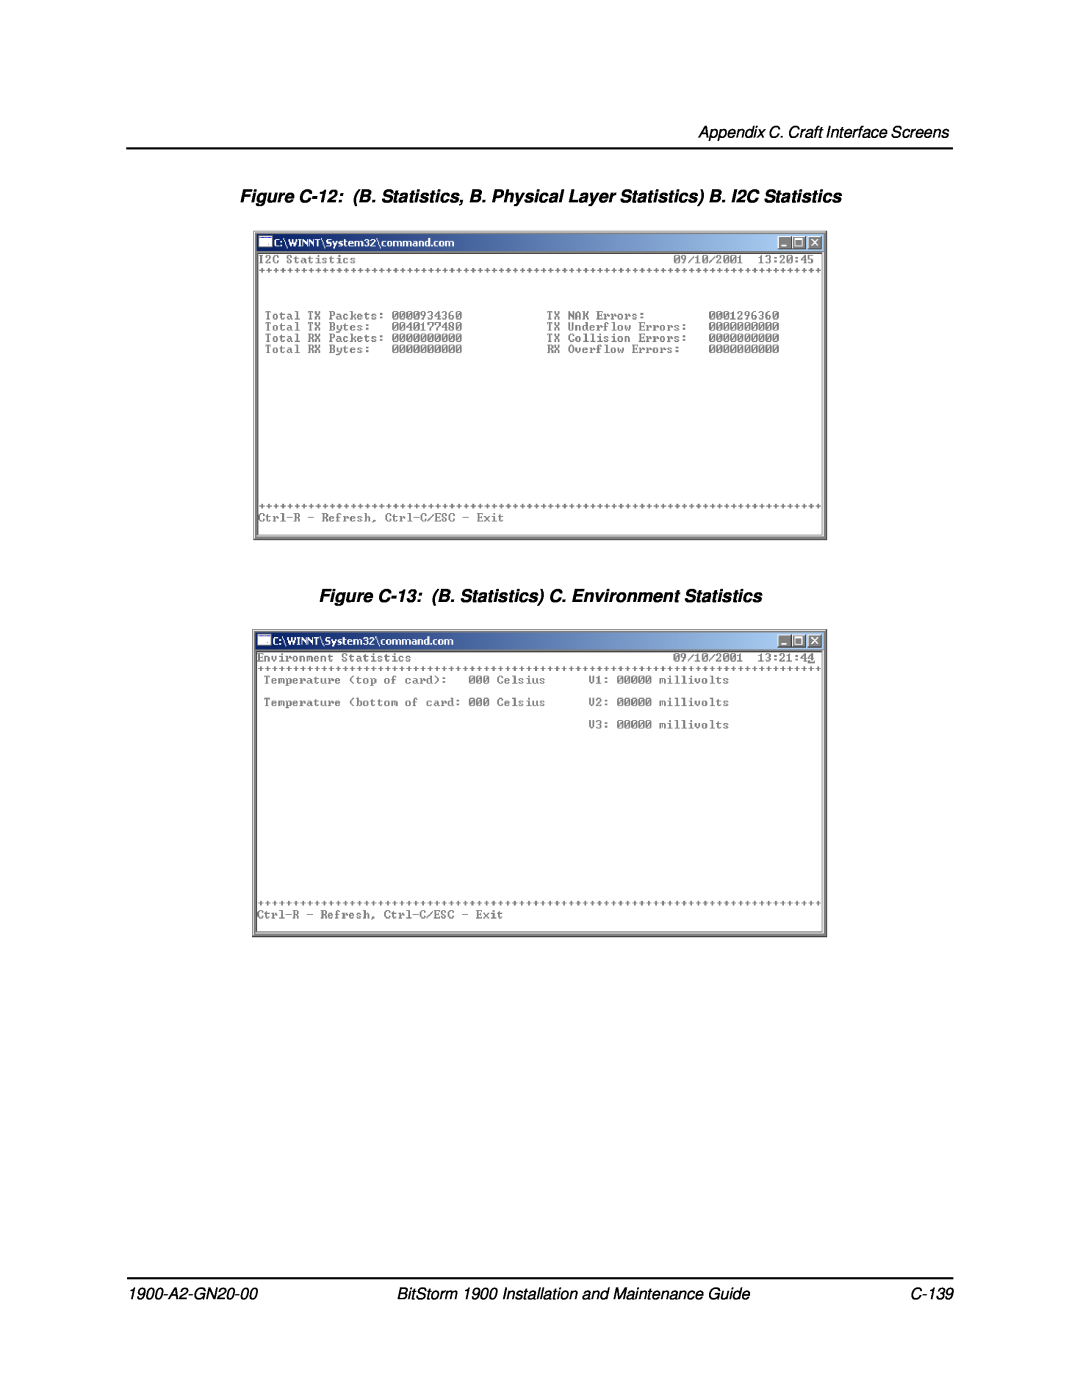 Paradyne Figure C-13 B. Statistics C. Environment Statistics, Appendix C. Craft Interface Screens, 1900-A2-GN20-00 